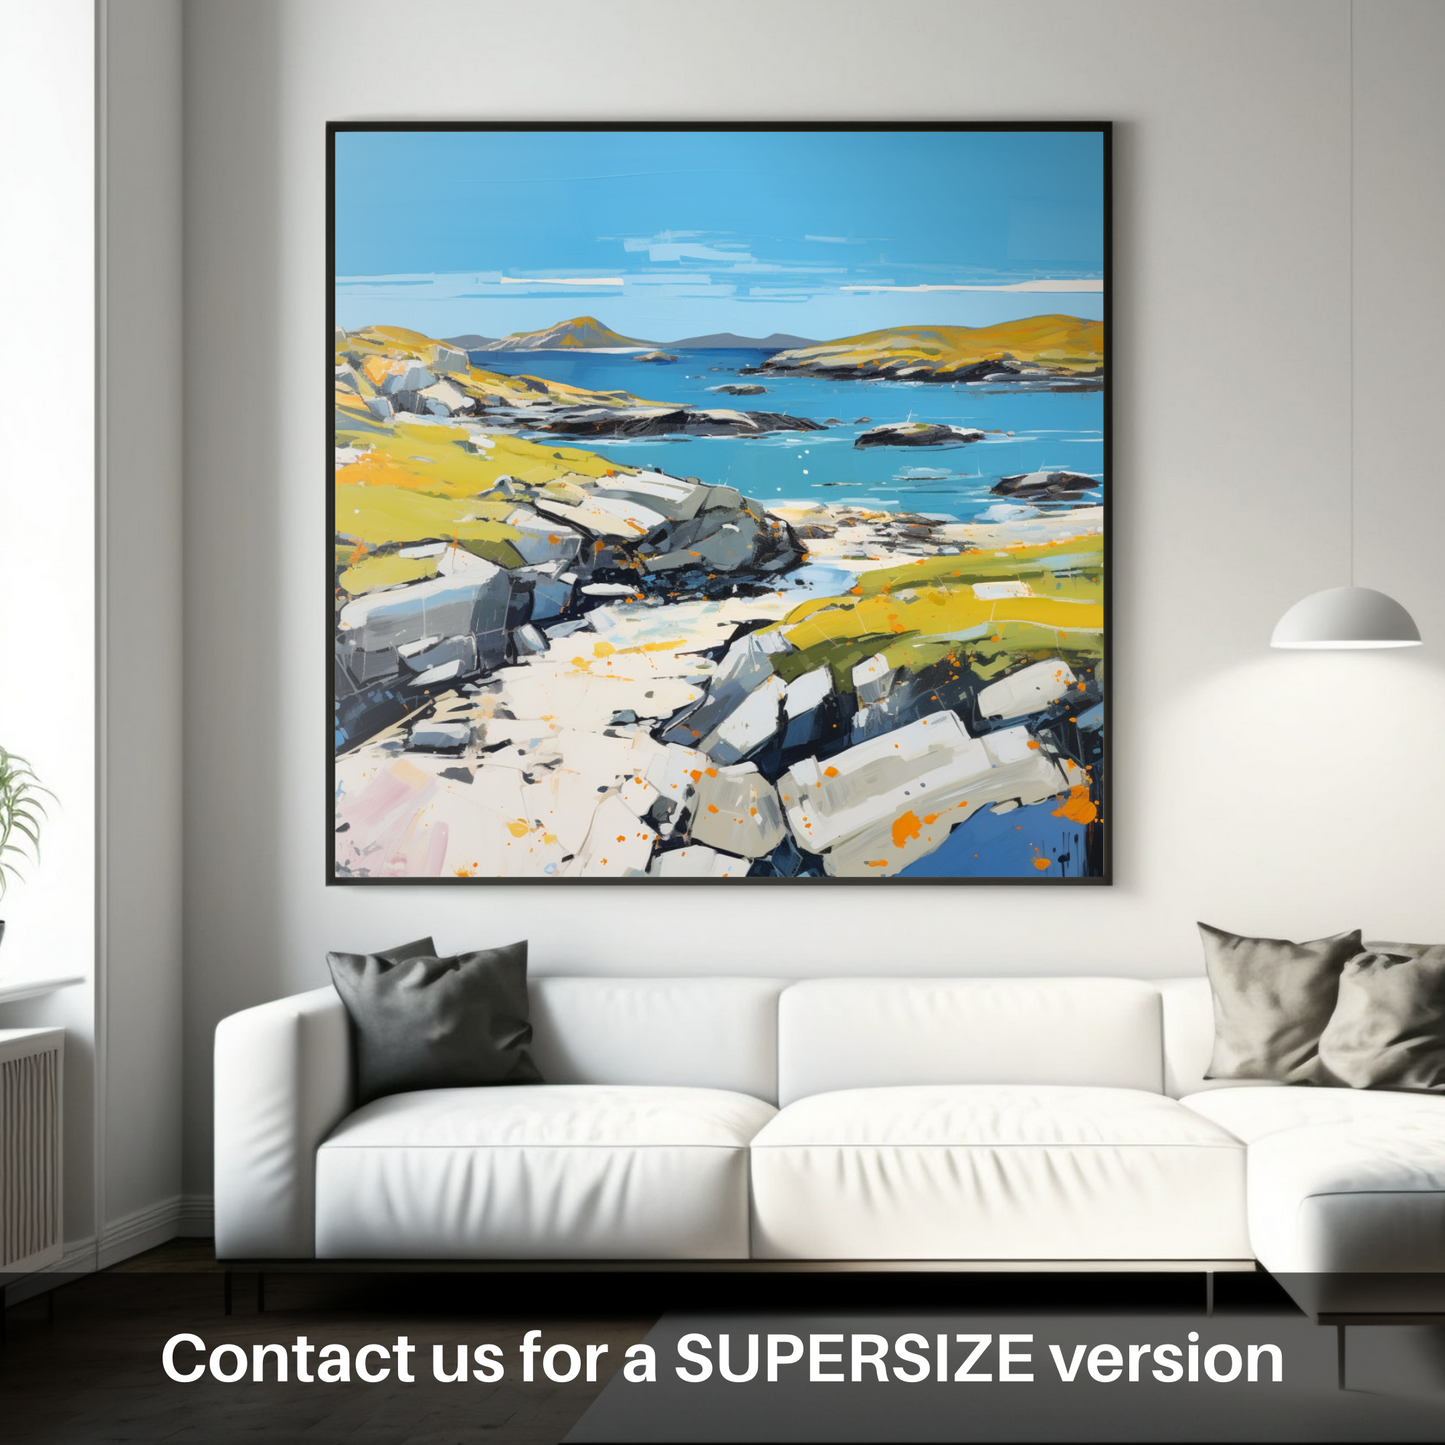 Huge supersize print of Isle of Harris, Outer Hebrides in summer